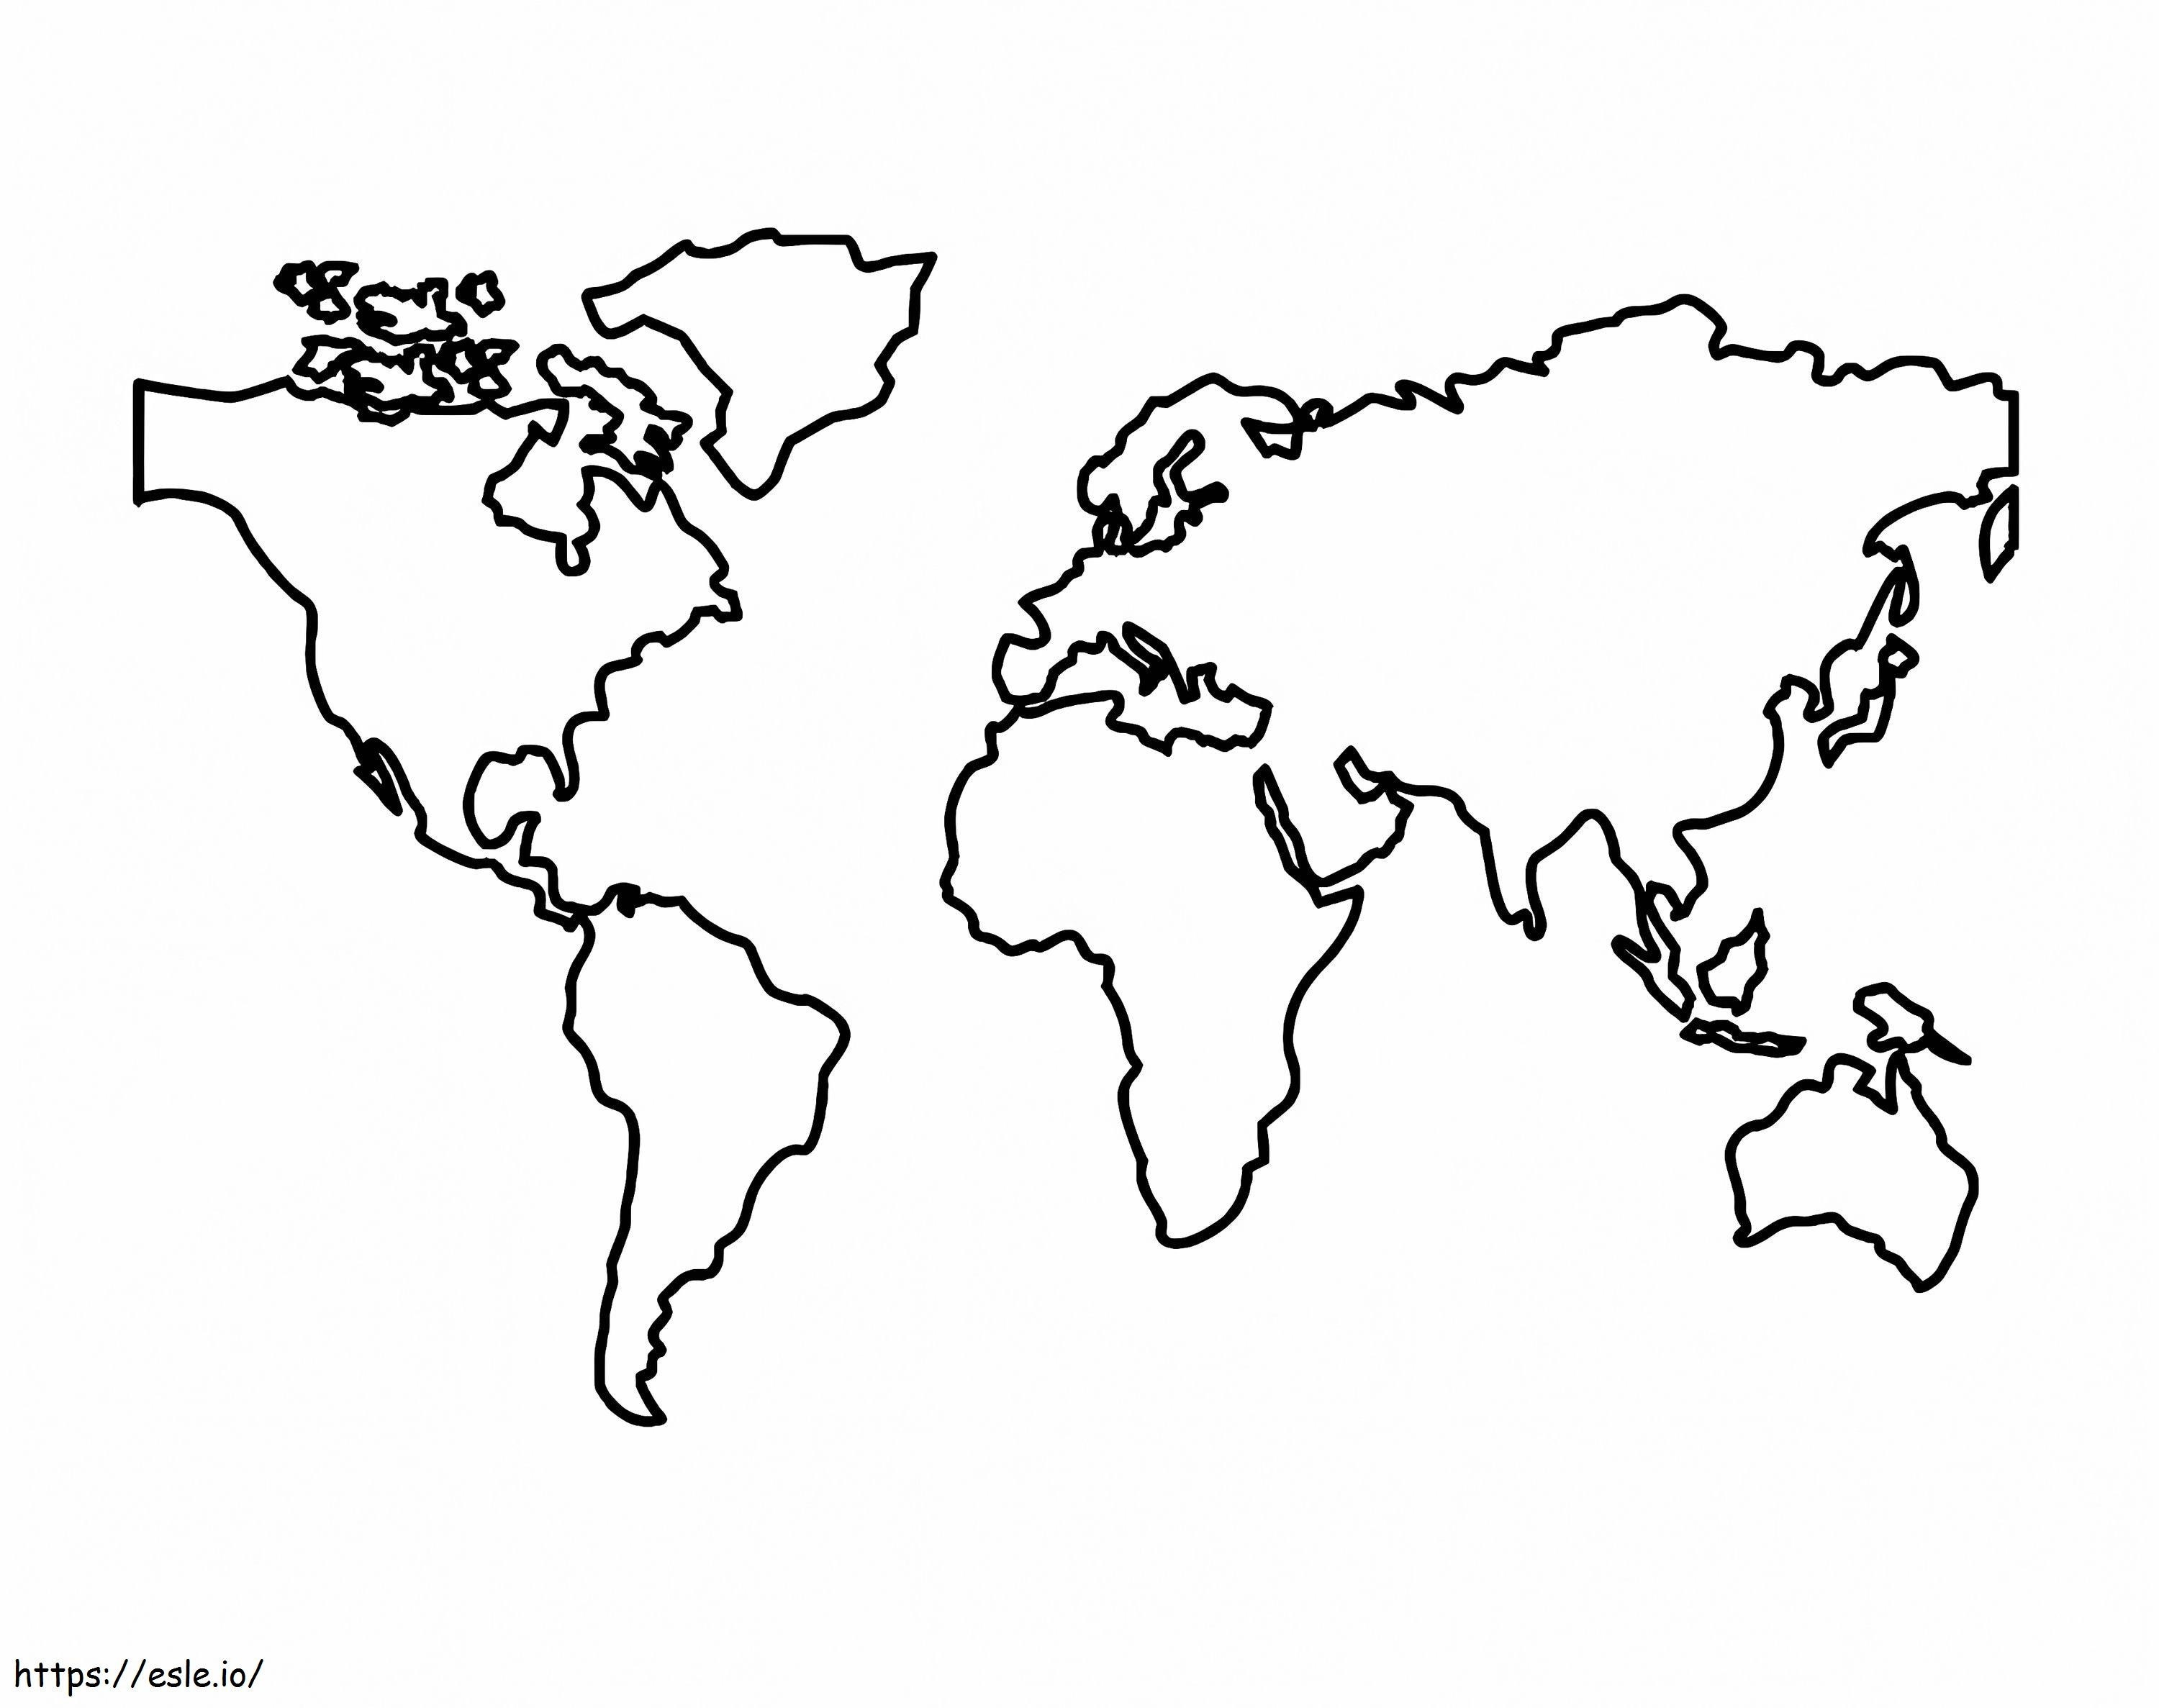  98084611 Weltkarte, Kontinente, globales Bild, Vektorillustration, Umrissdesign ausmalbilder